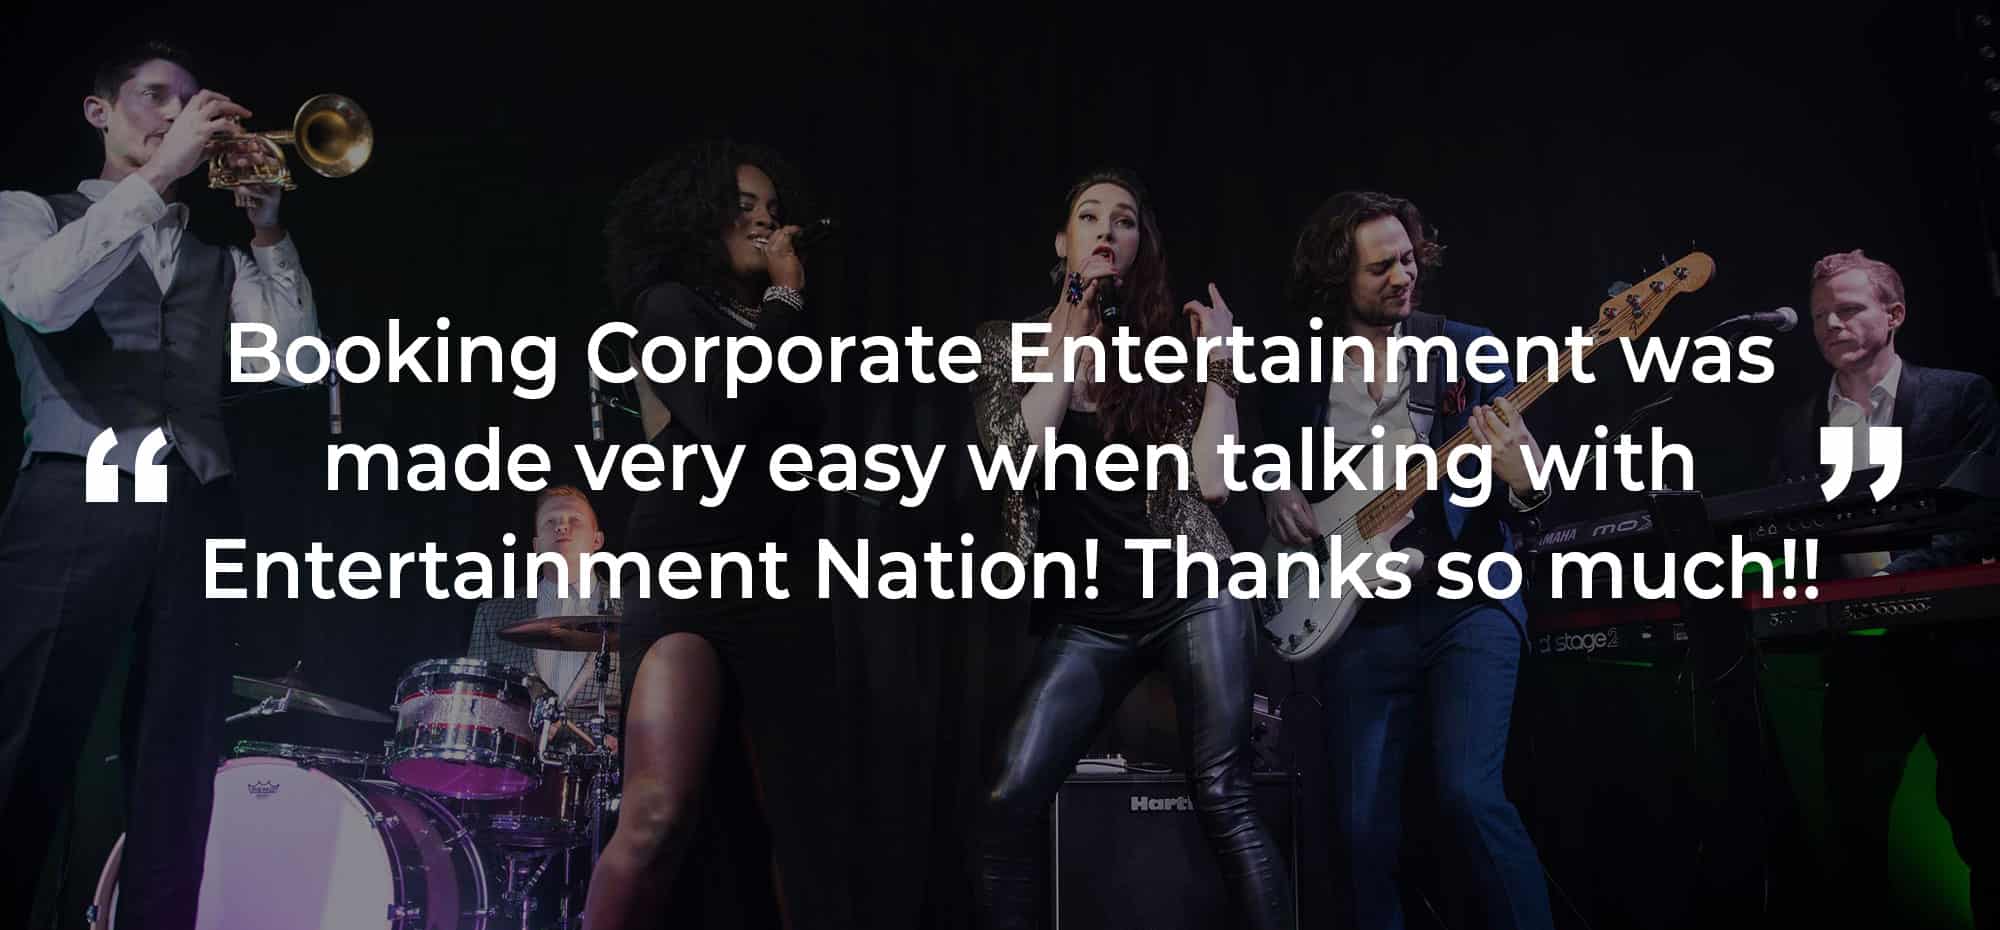 Client Review of Corporate Entertainment Essex